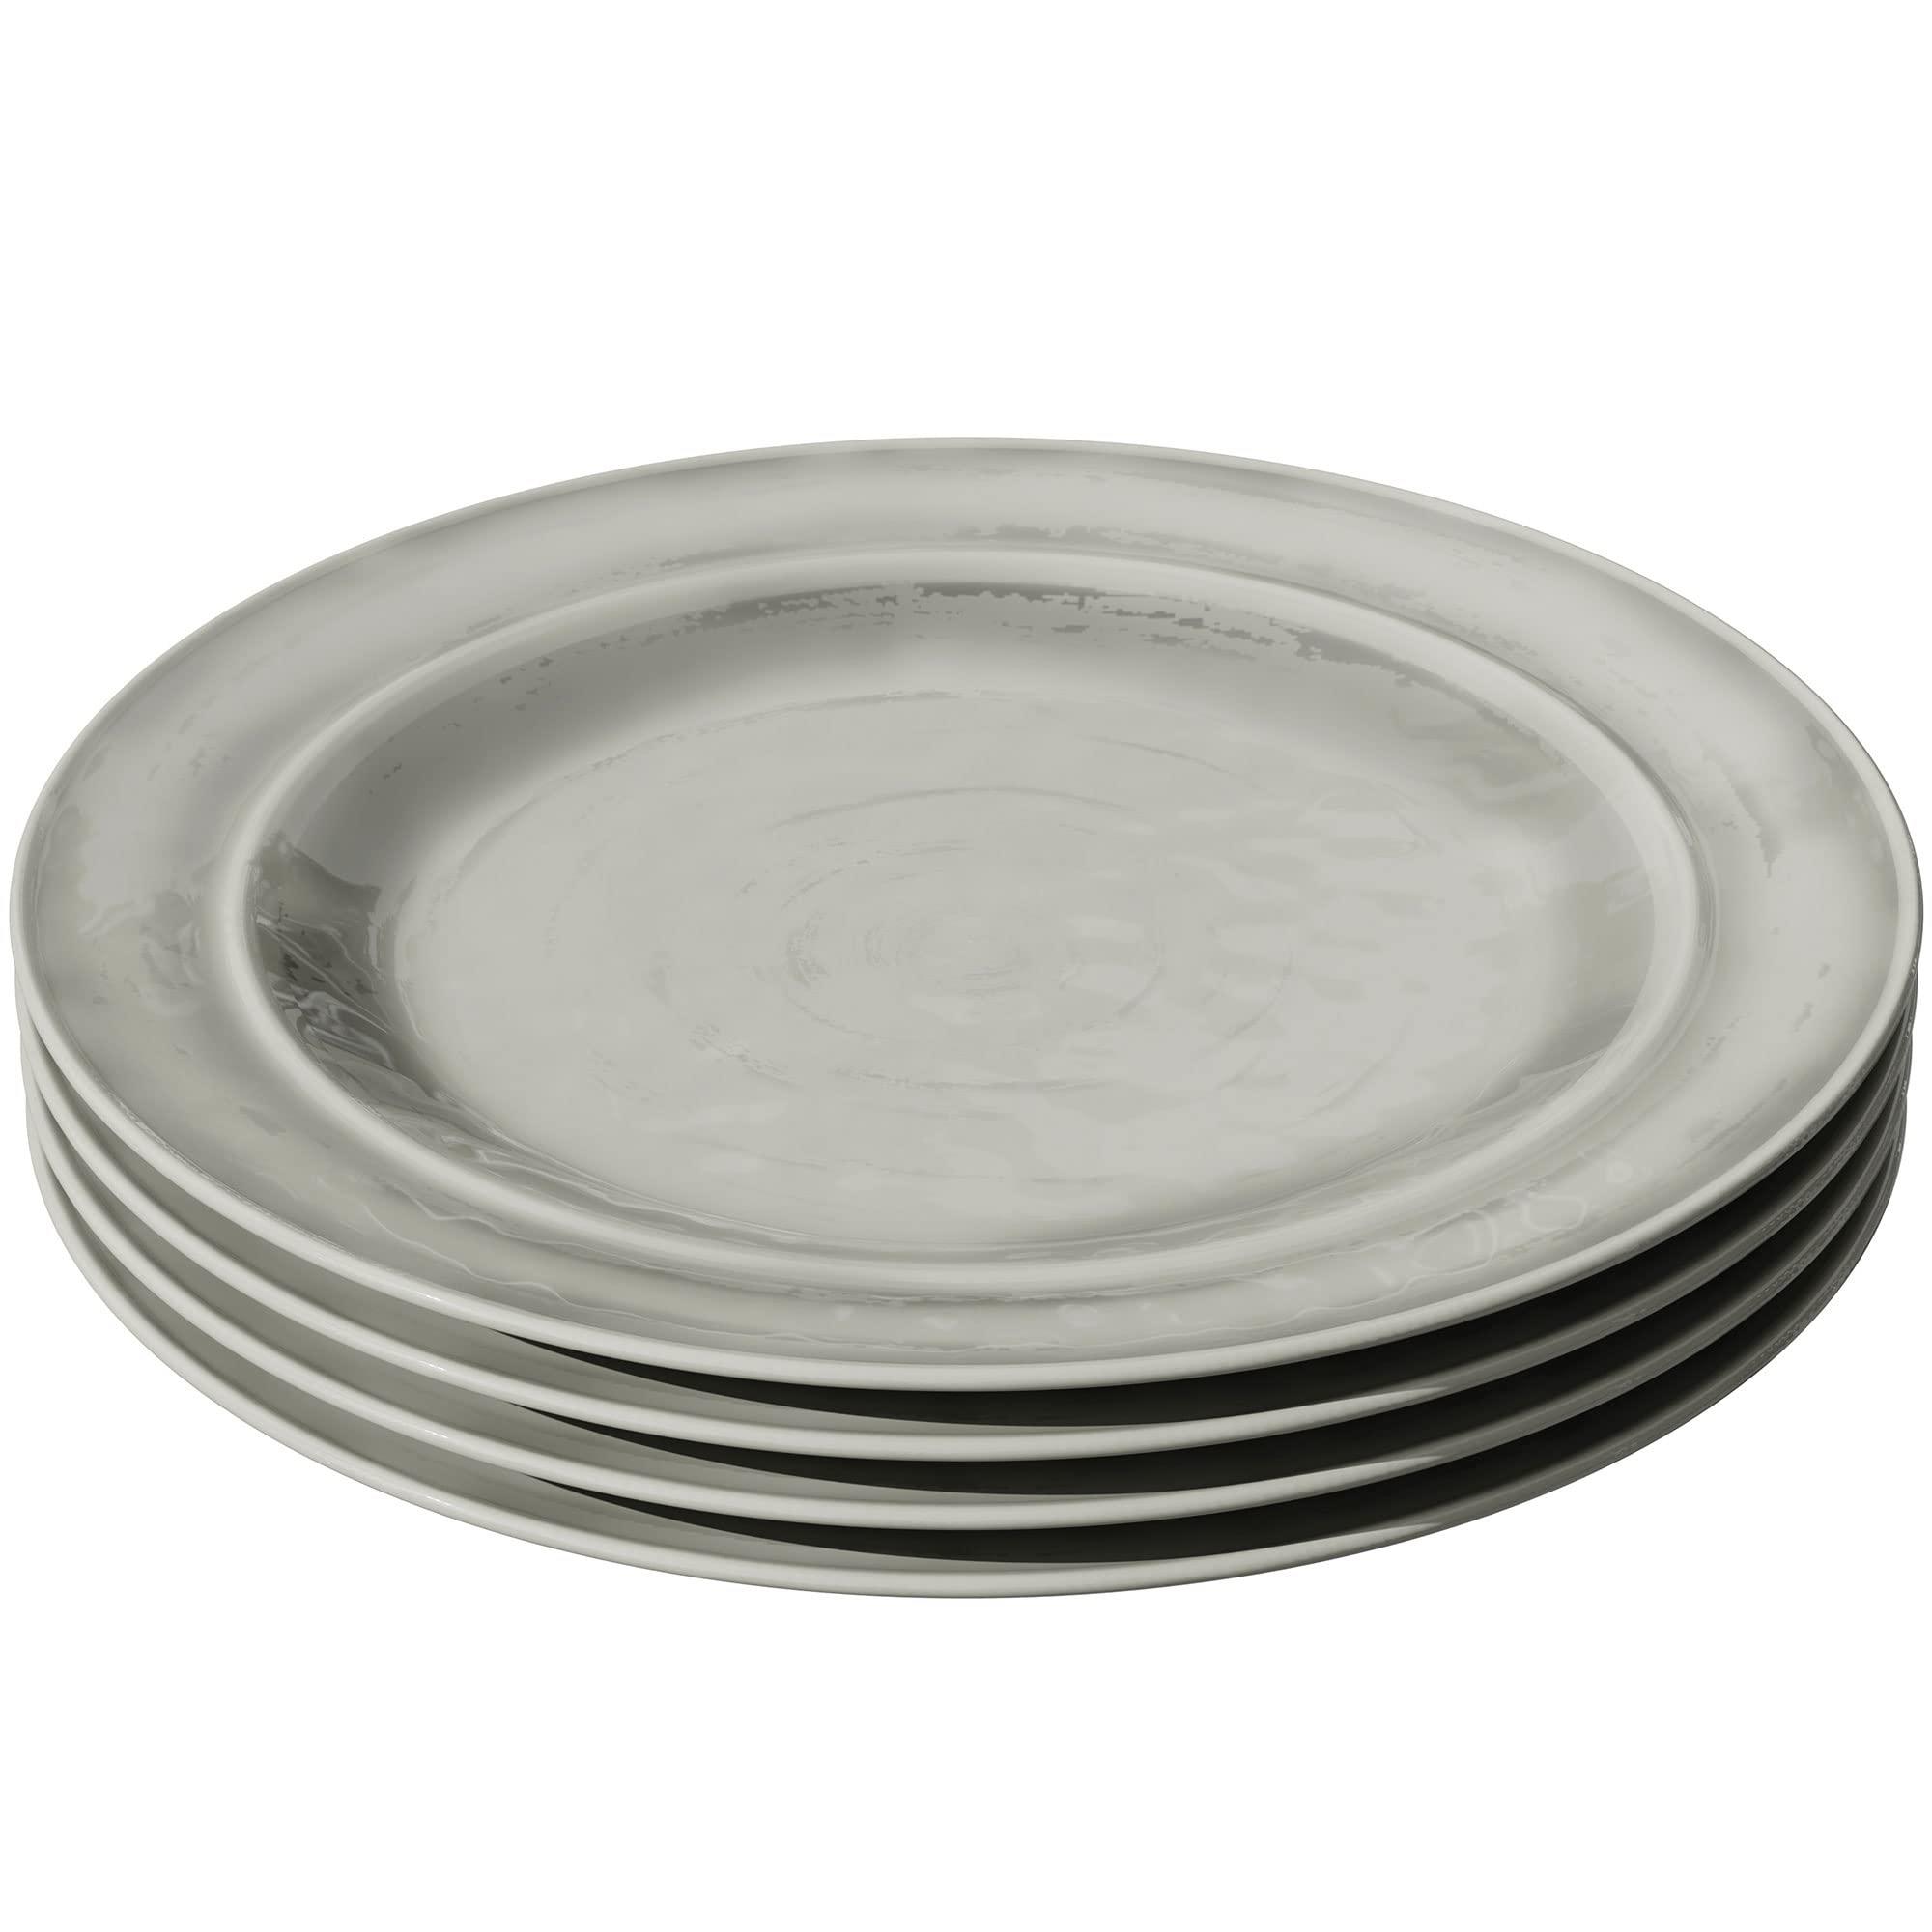 American Atelier fifth avenue melamine dinner plates | set of 4 | break and chip resistant, durable, and kid-friendly dinnerware set | indoor 